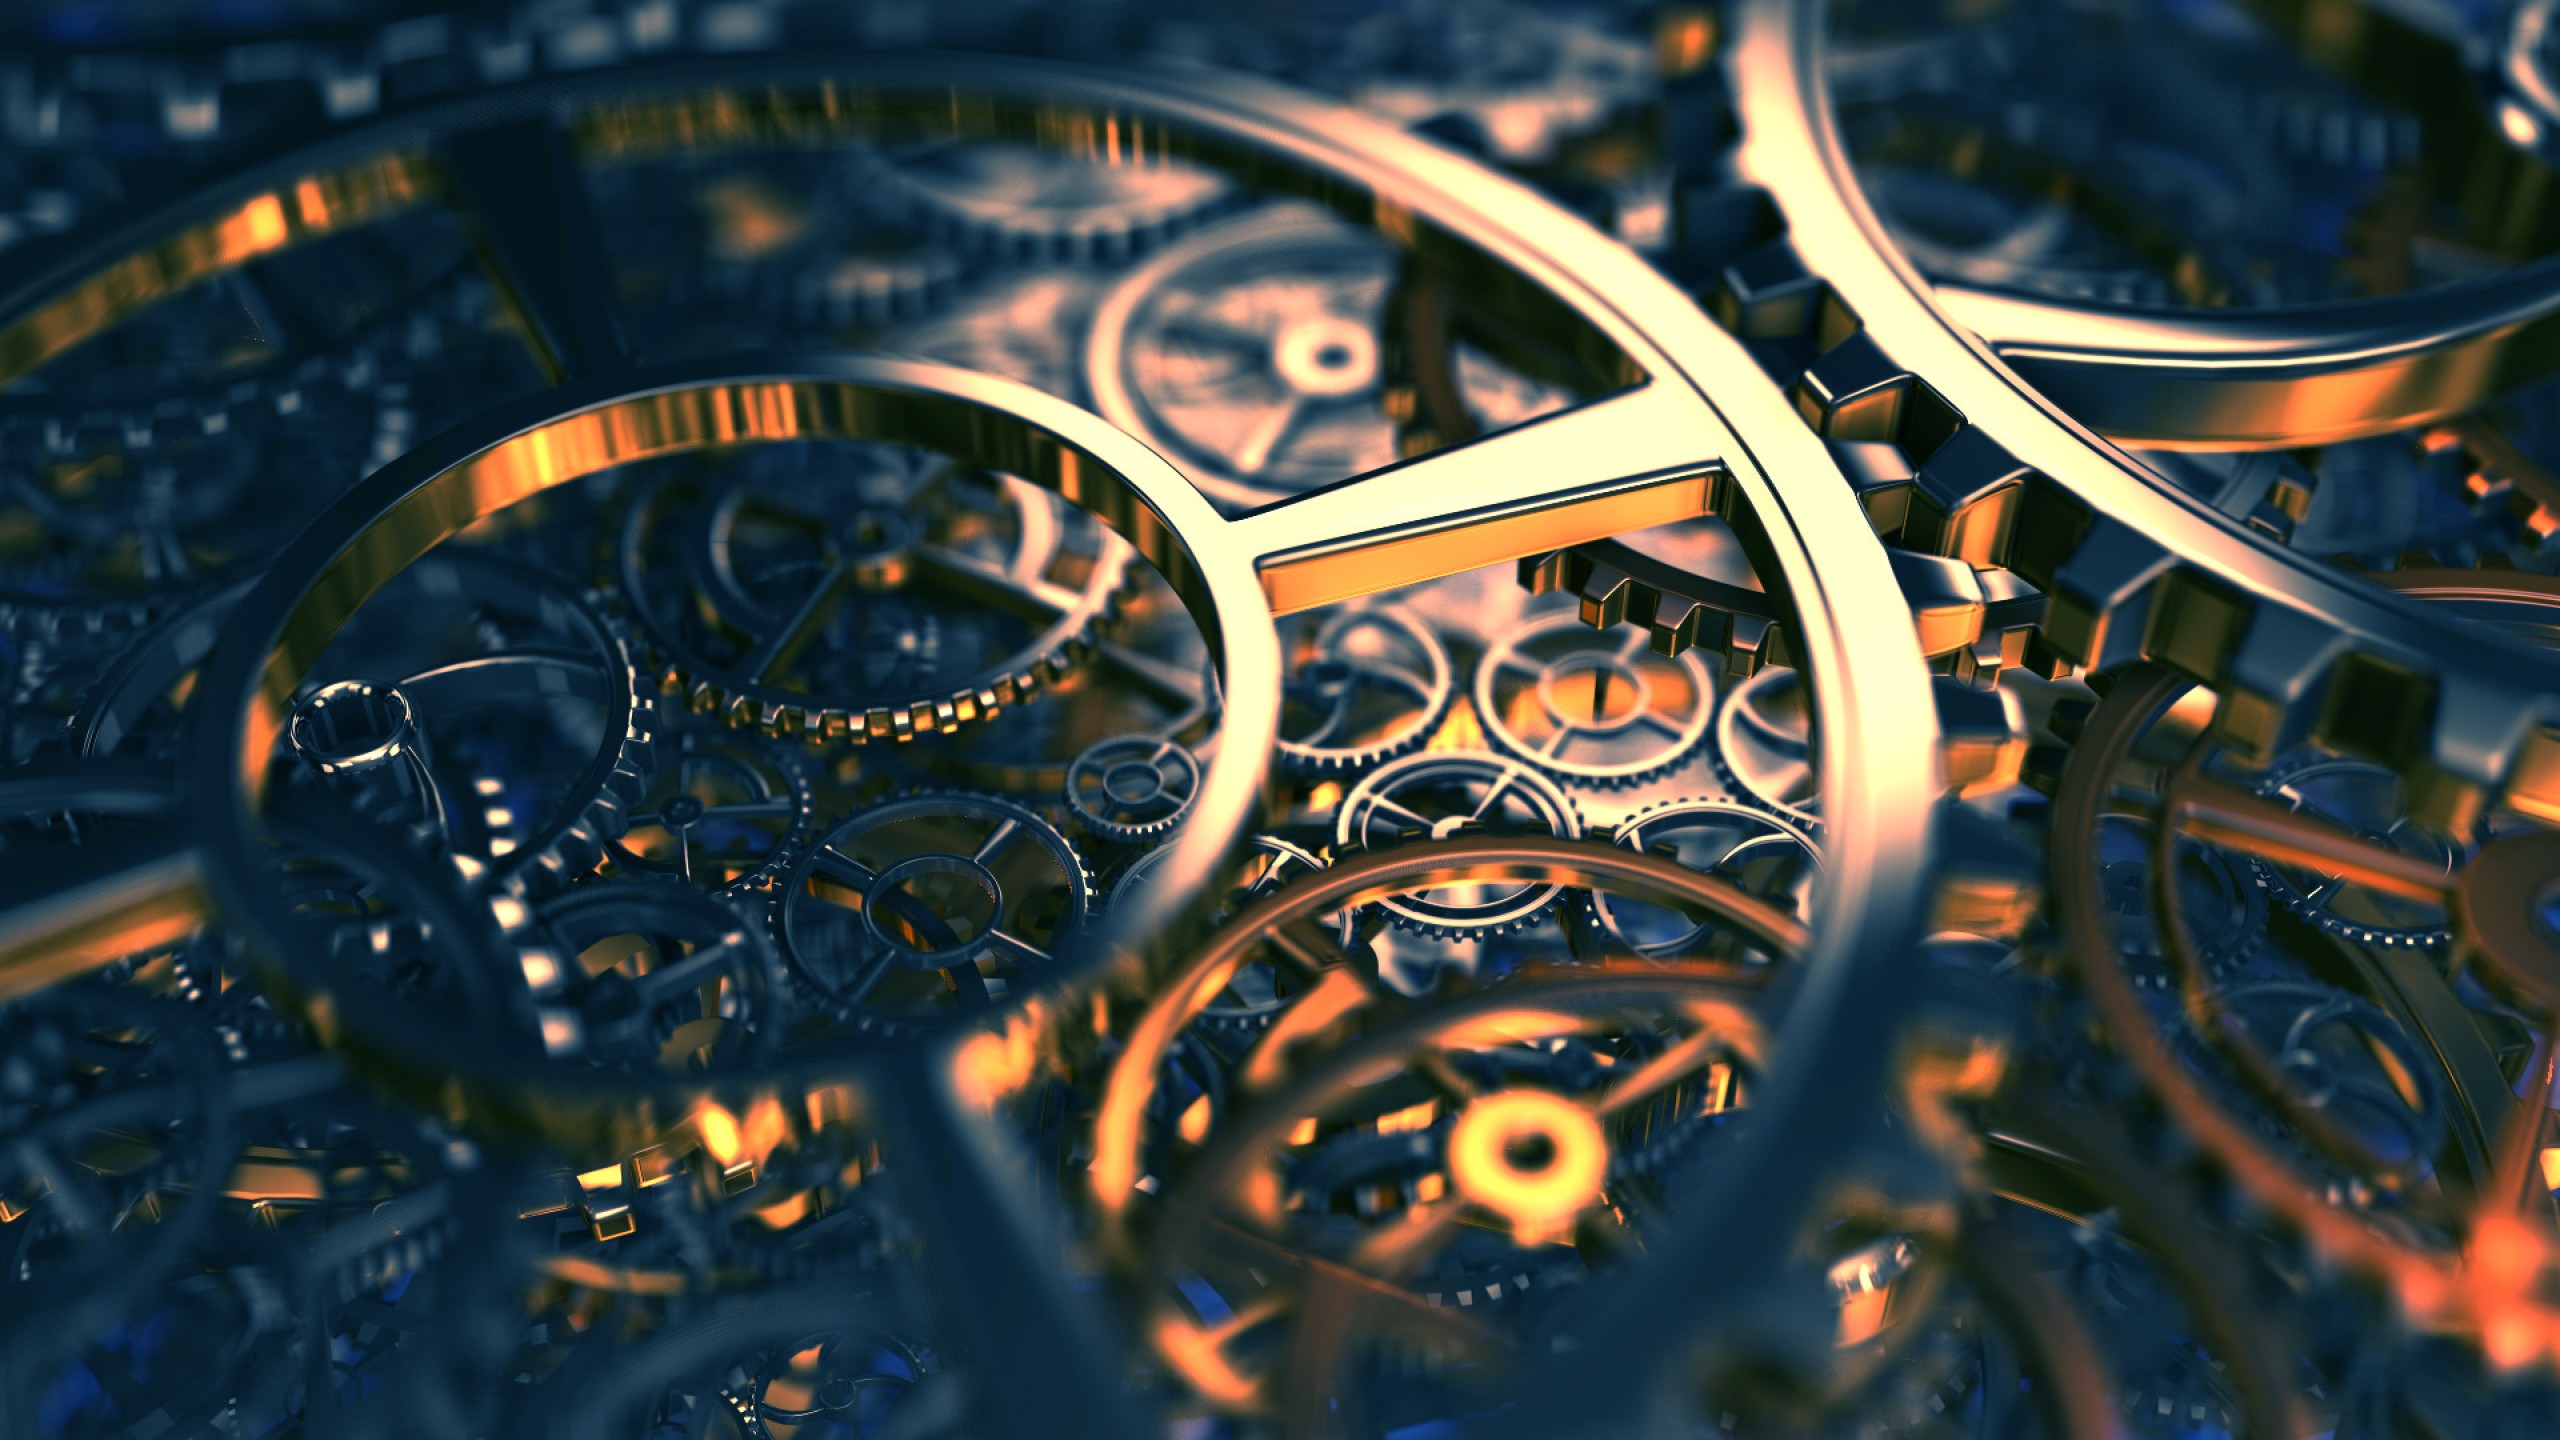 Gears Mechanics Clockwork Digital Art 2560x1440